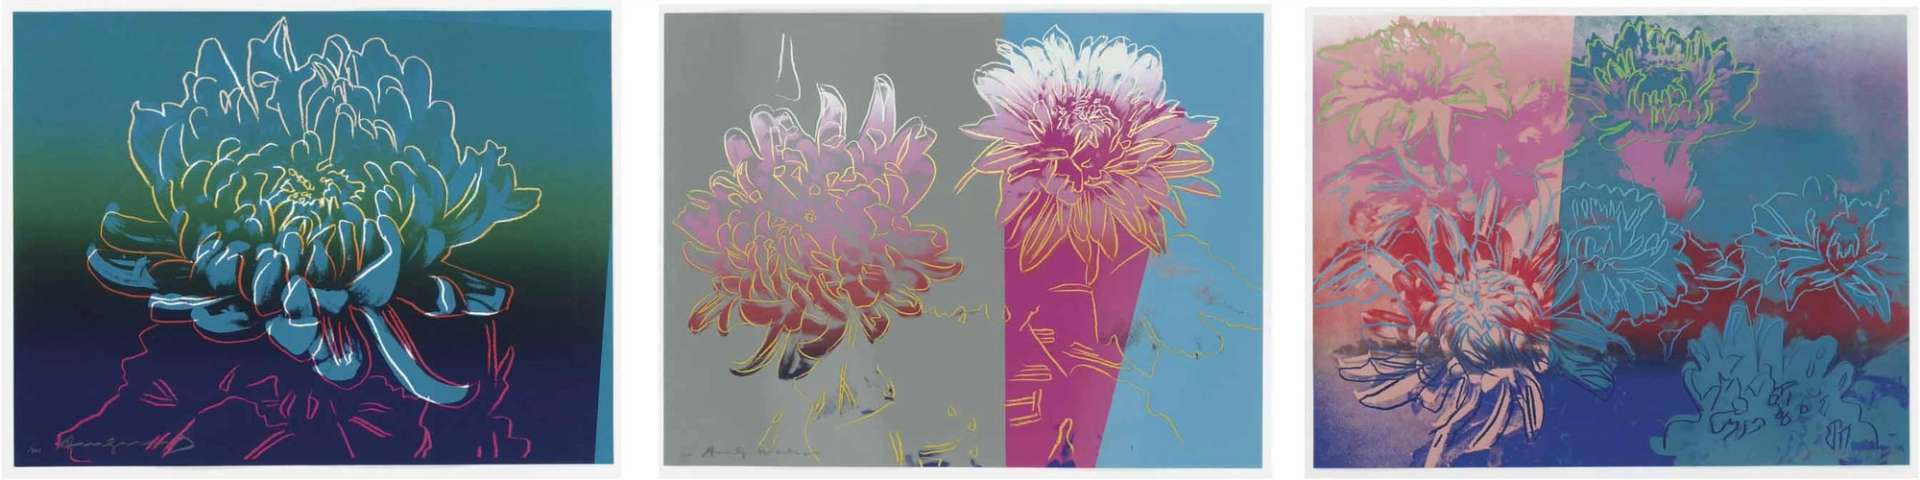 Kiku (complete set) by Andy Warhol - MyArtBroker